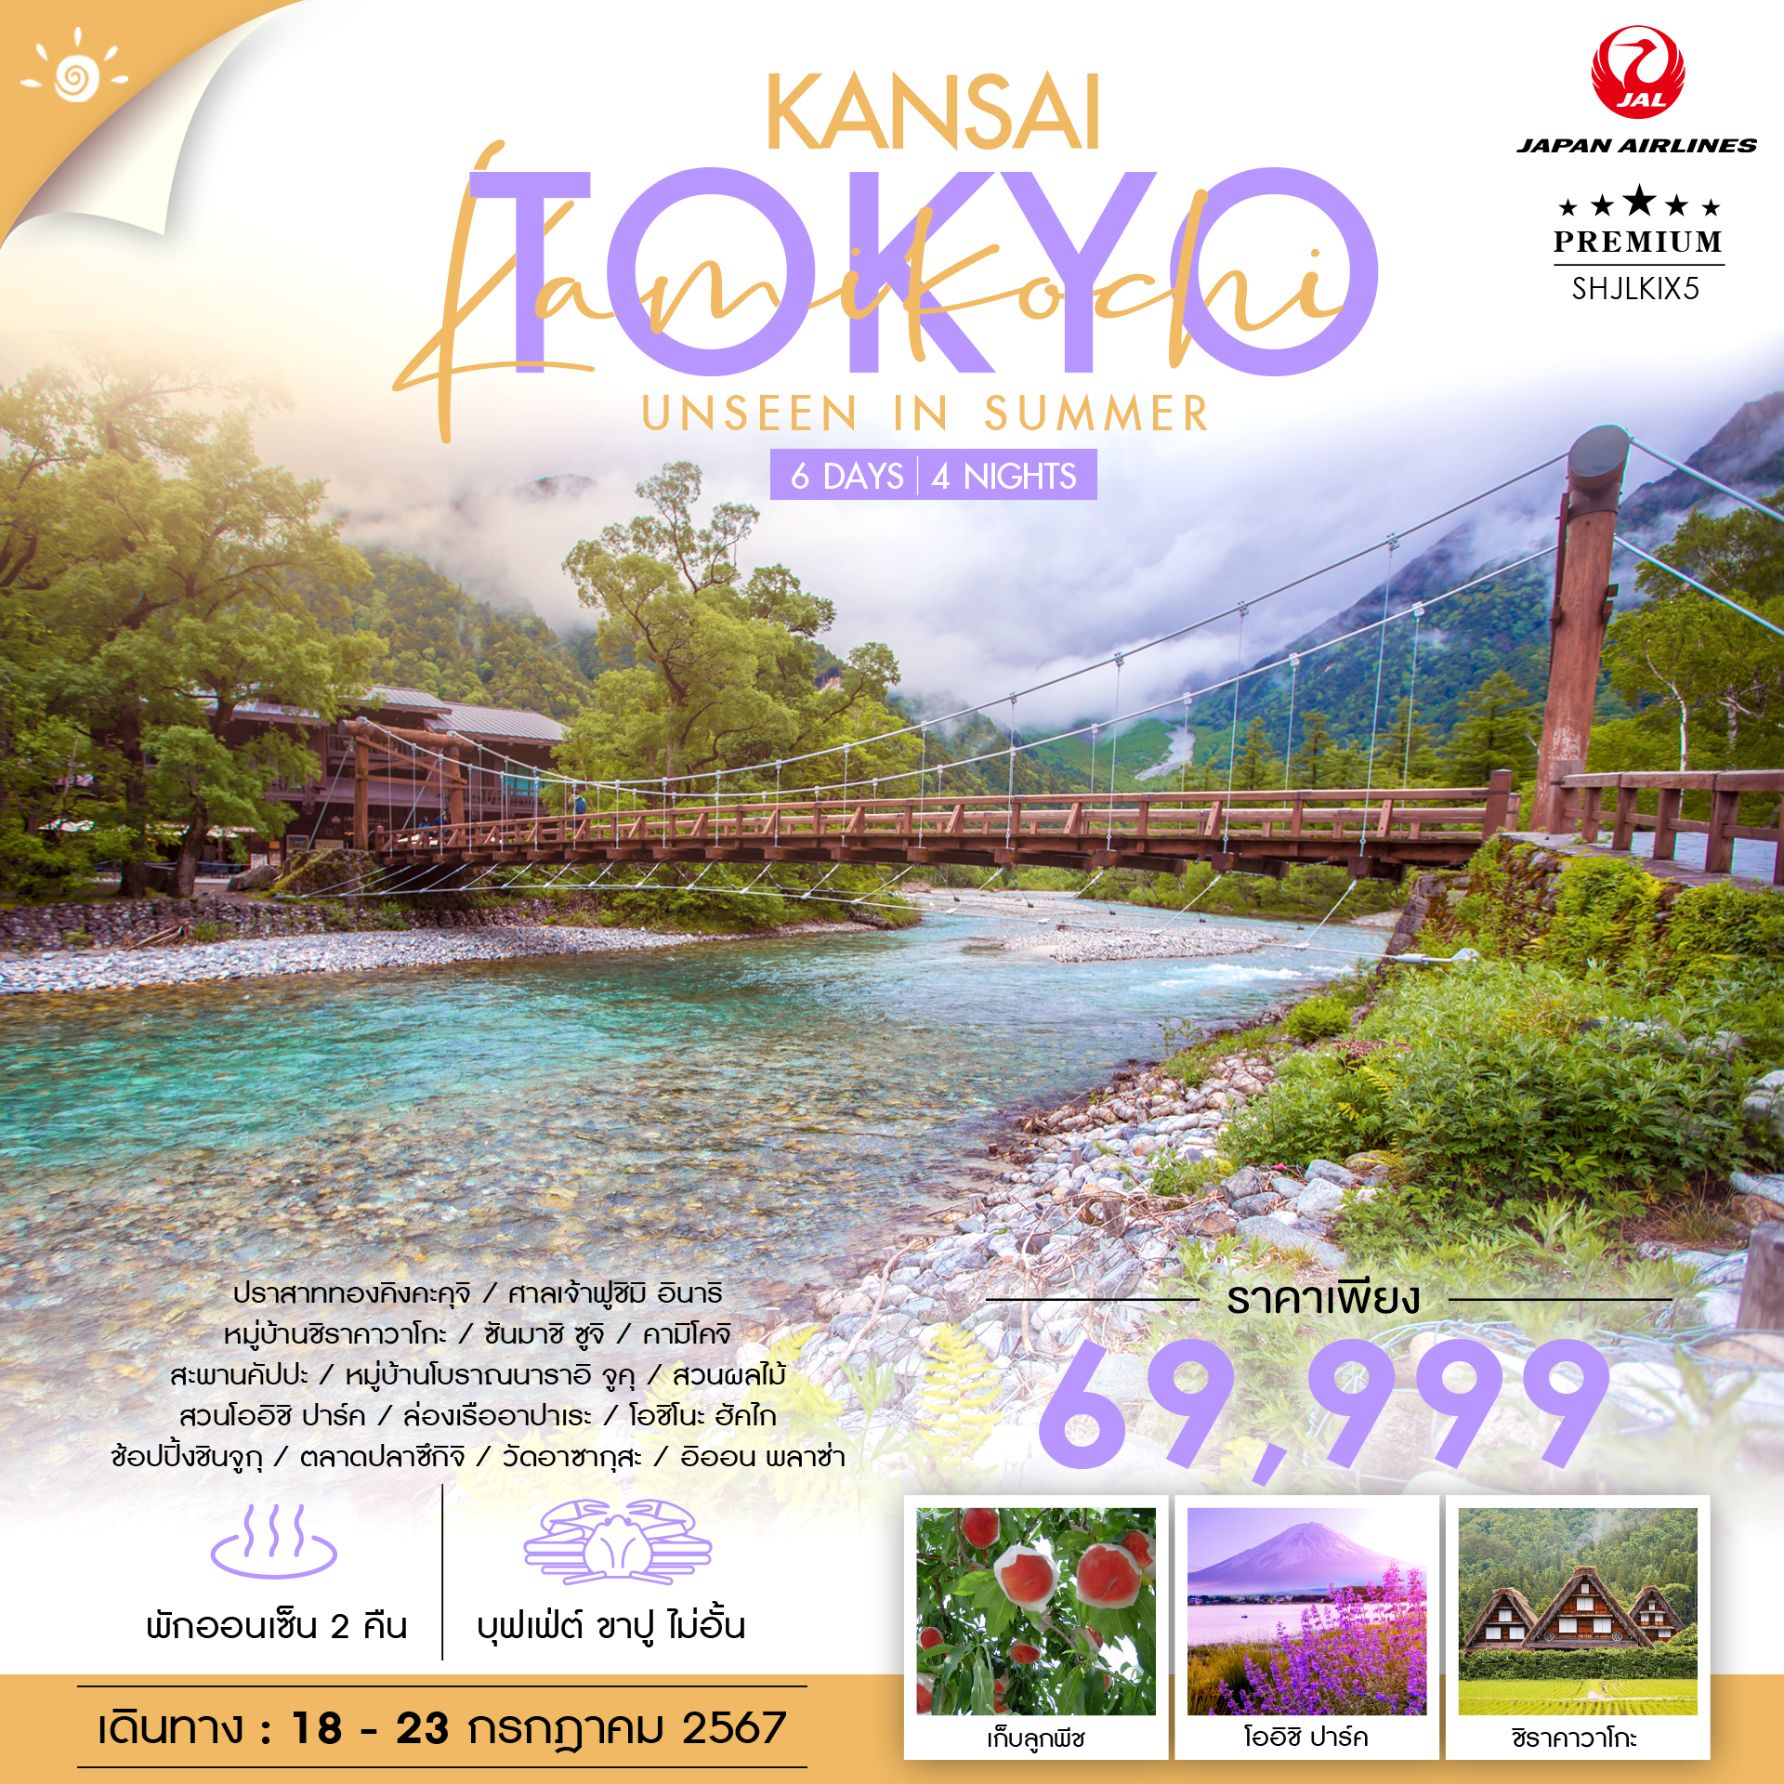 TOKYO KANSAI UNSEEN IN SUMMER Kamikochi โตเกียว คันไซ คามิโคจิ 6 วัน 4 คืน เดินทาง 18-23 ก.ค.67 ราคา 69,999.- JAPAN AIRLINE (JL)